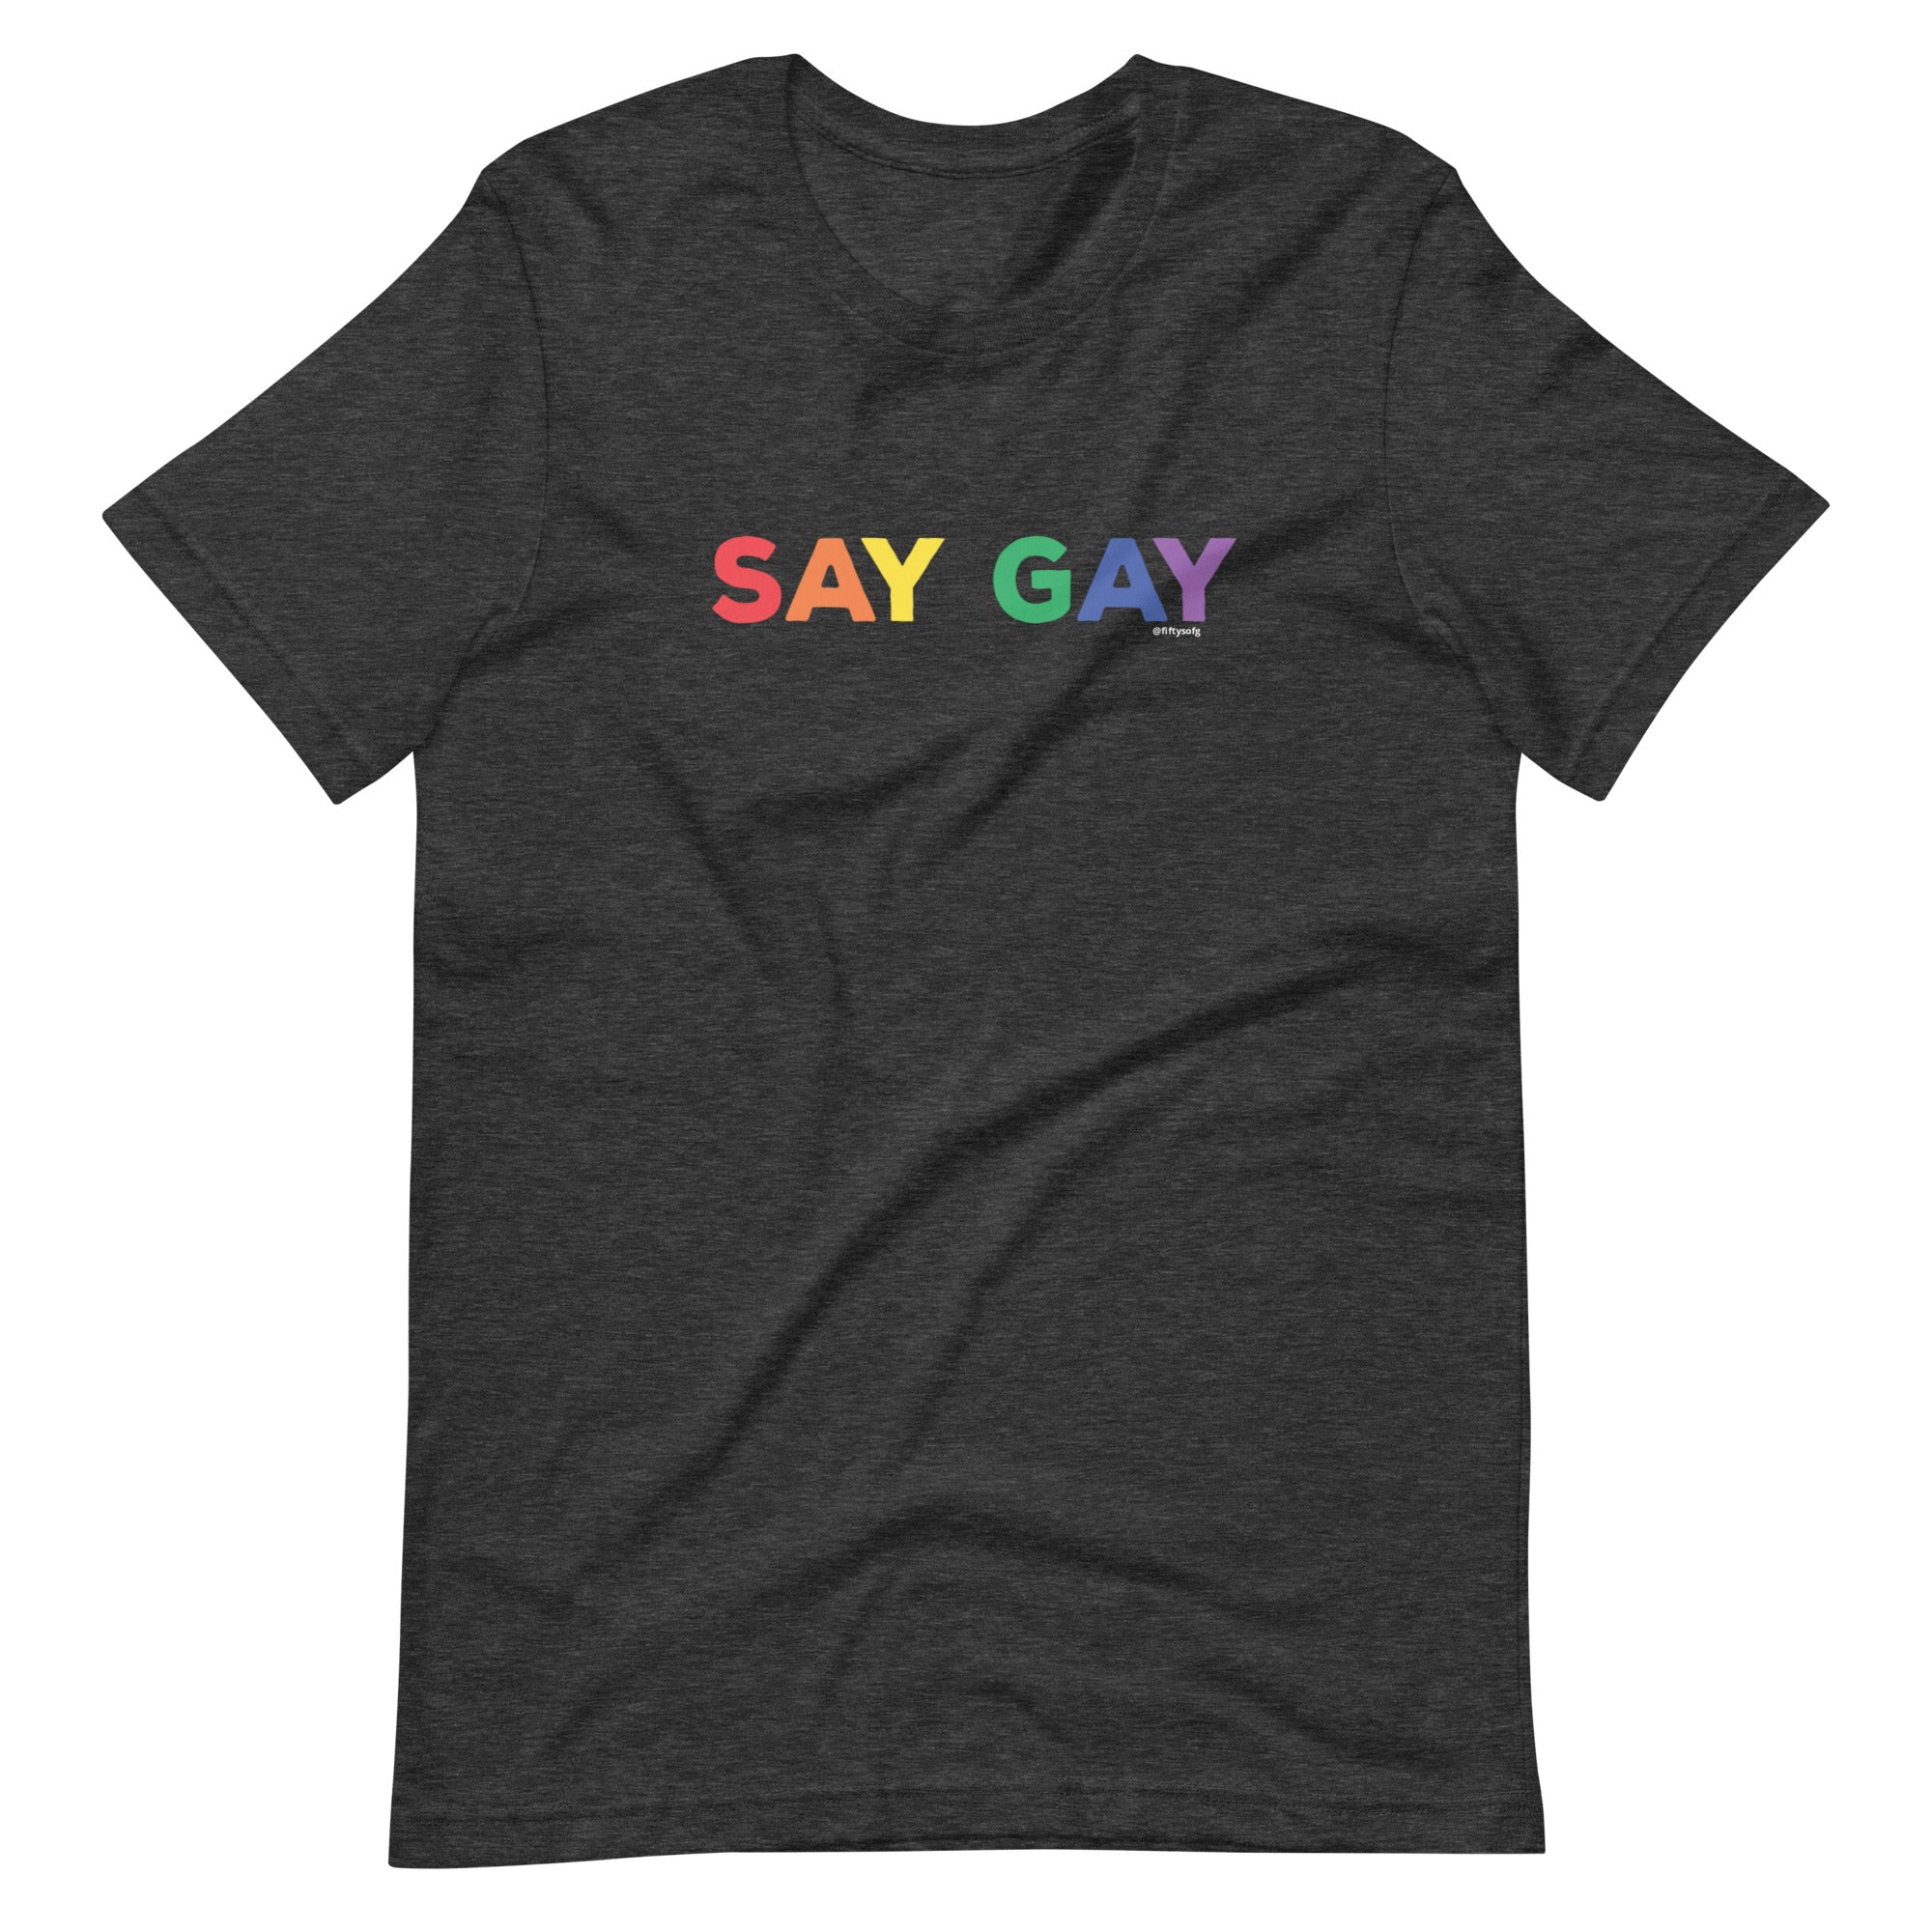 SAY GAY - Rainbow Pride - low font - Unisex t-shirt